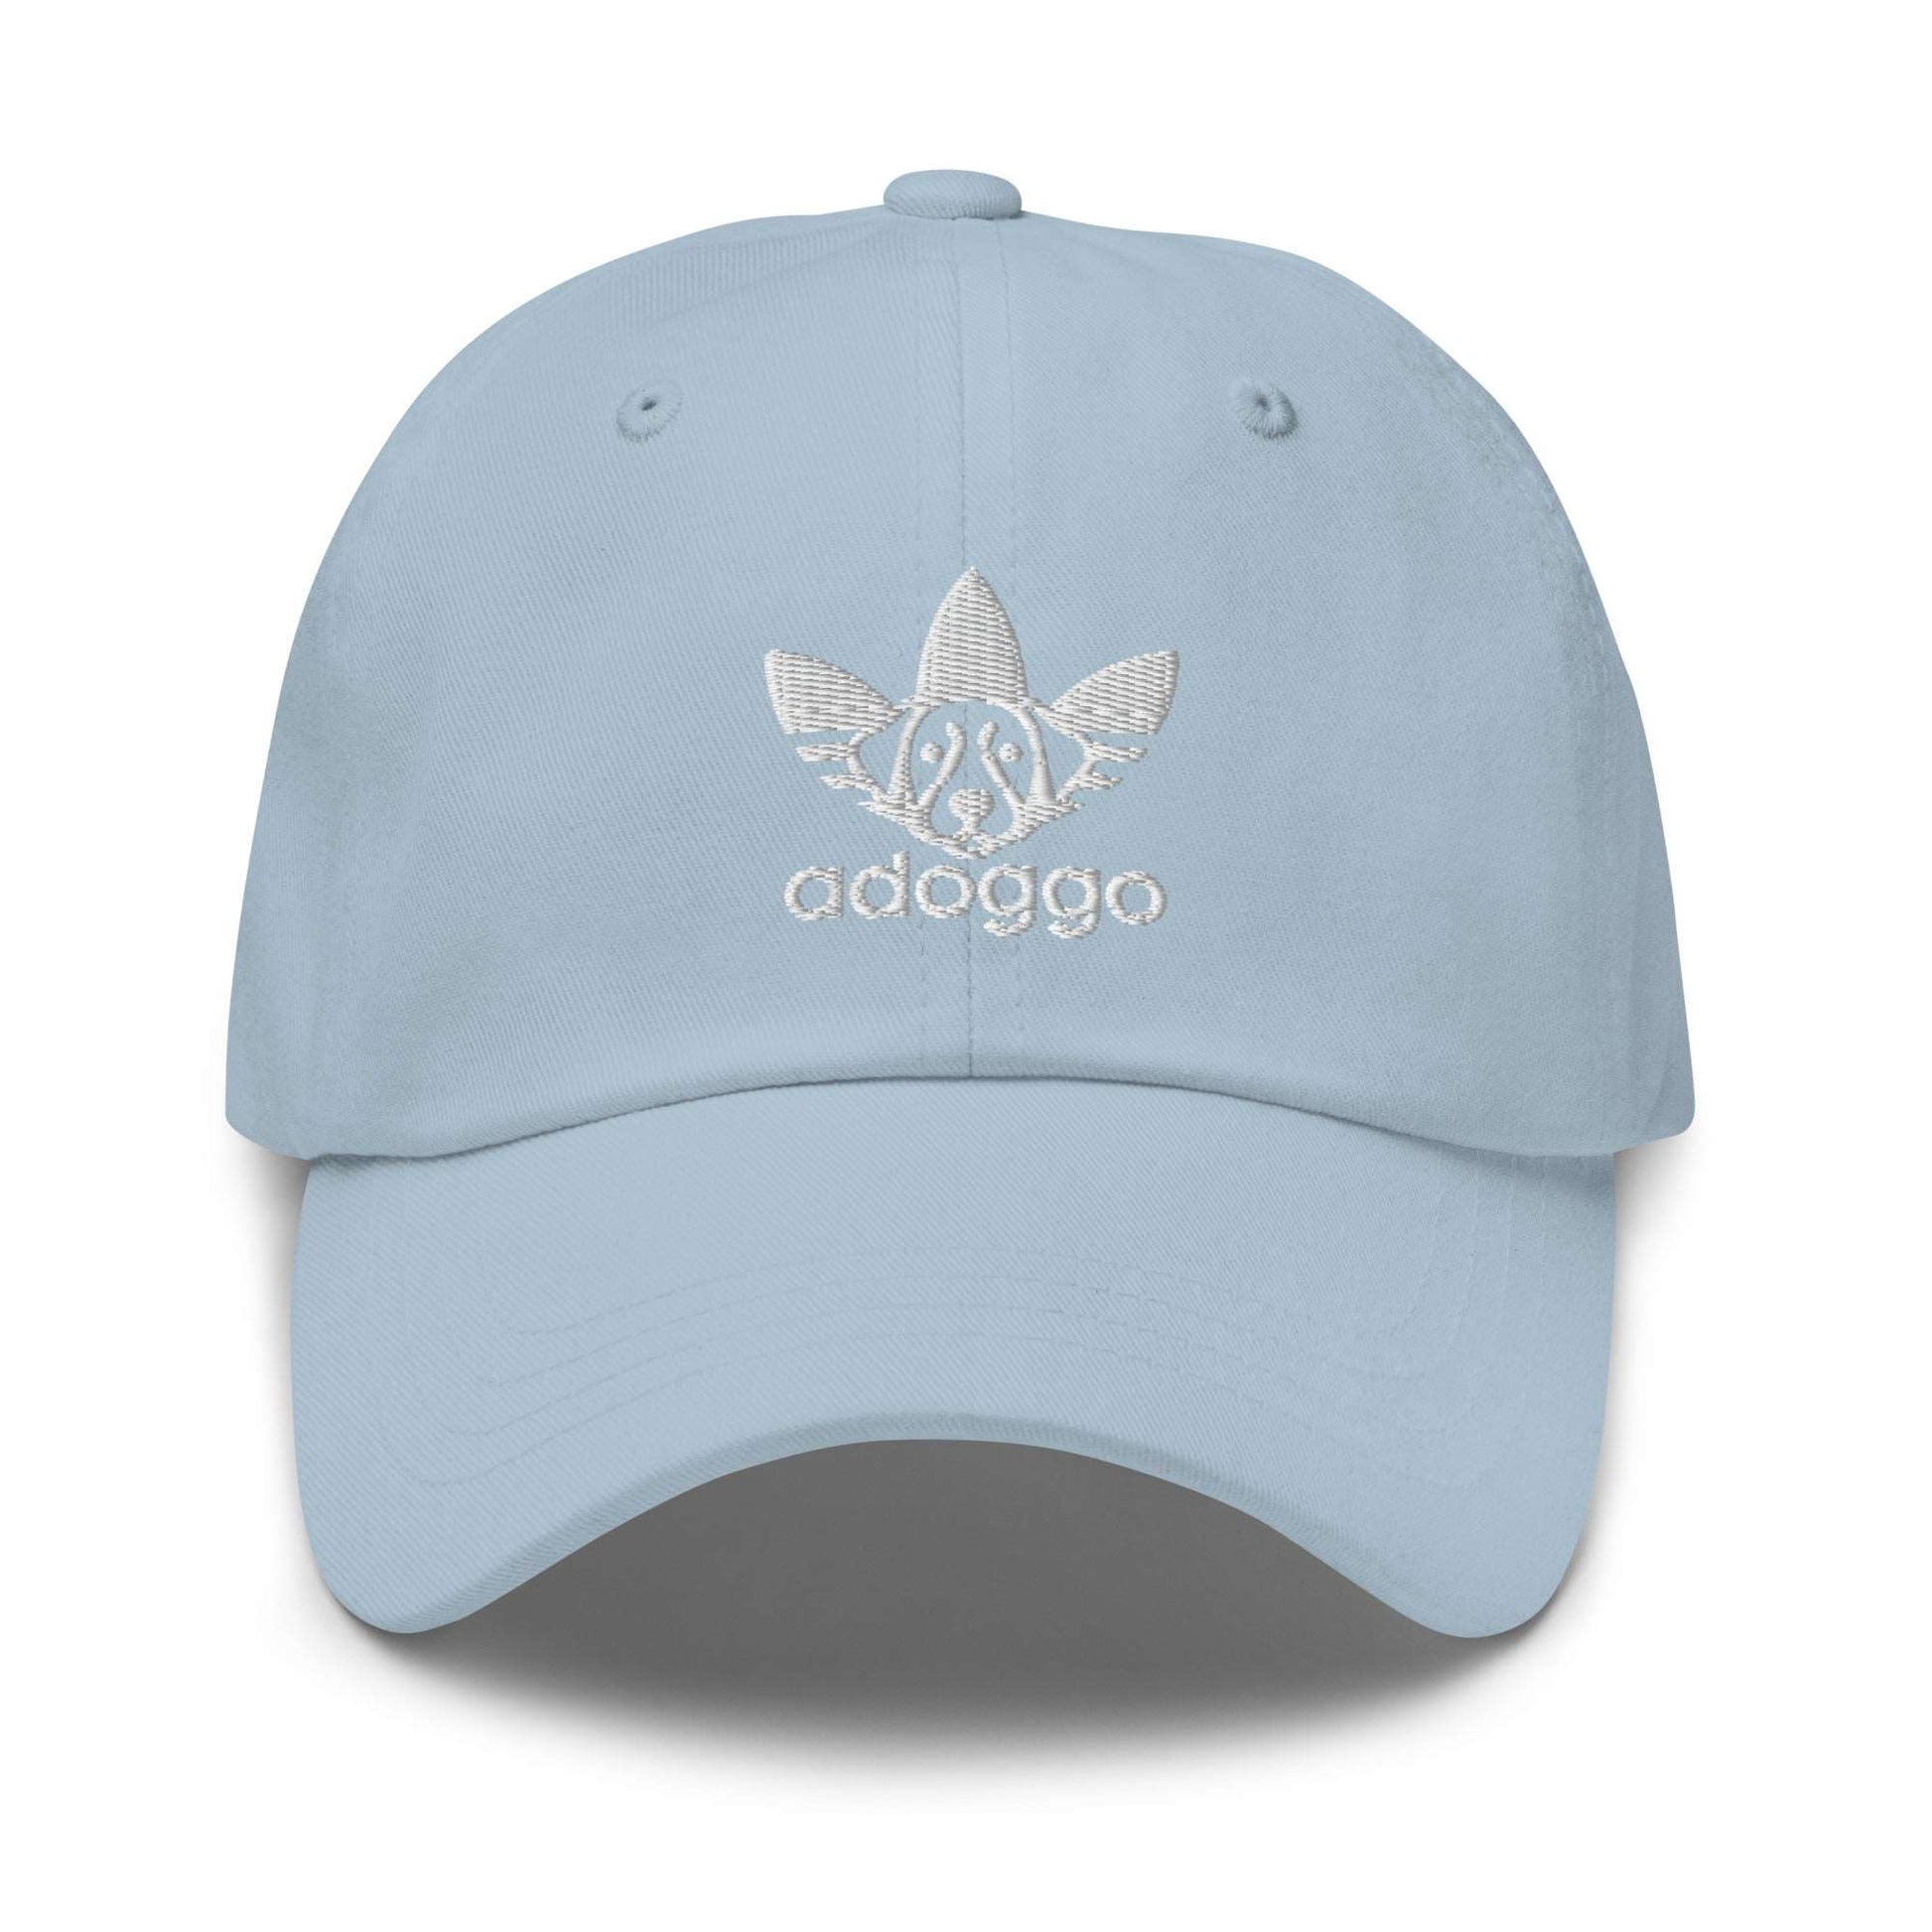 Adoggo hat